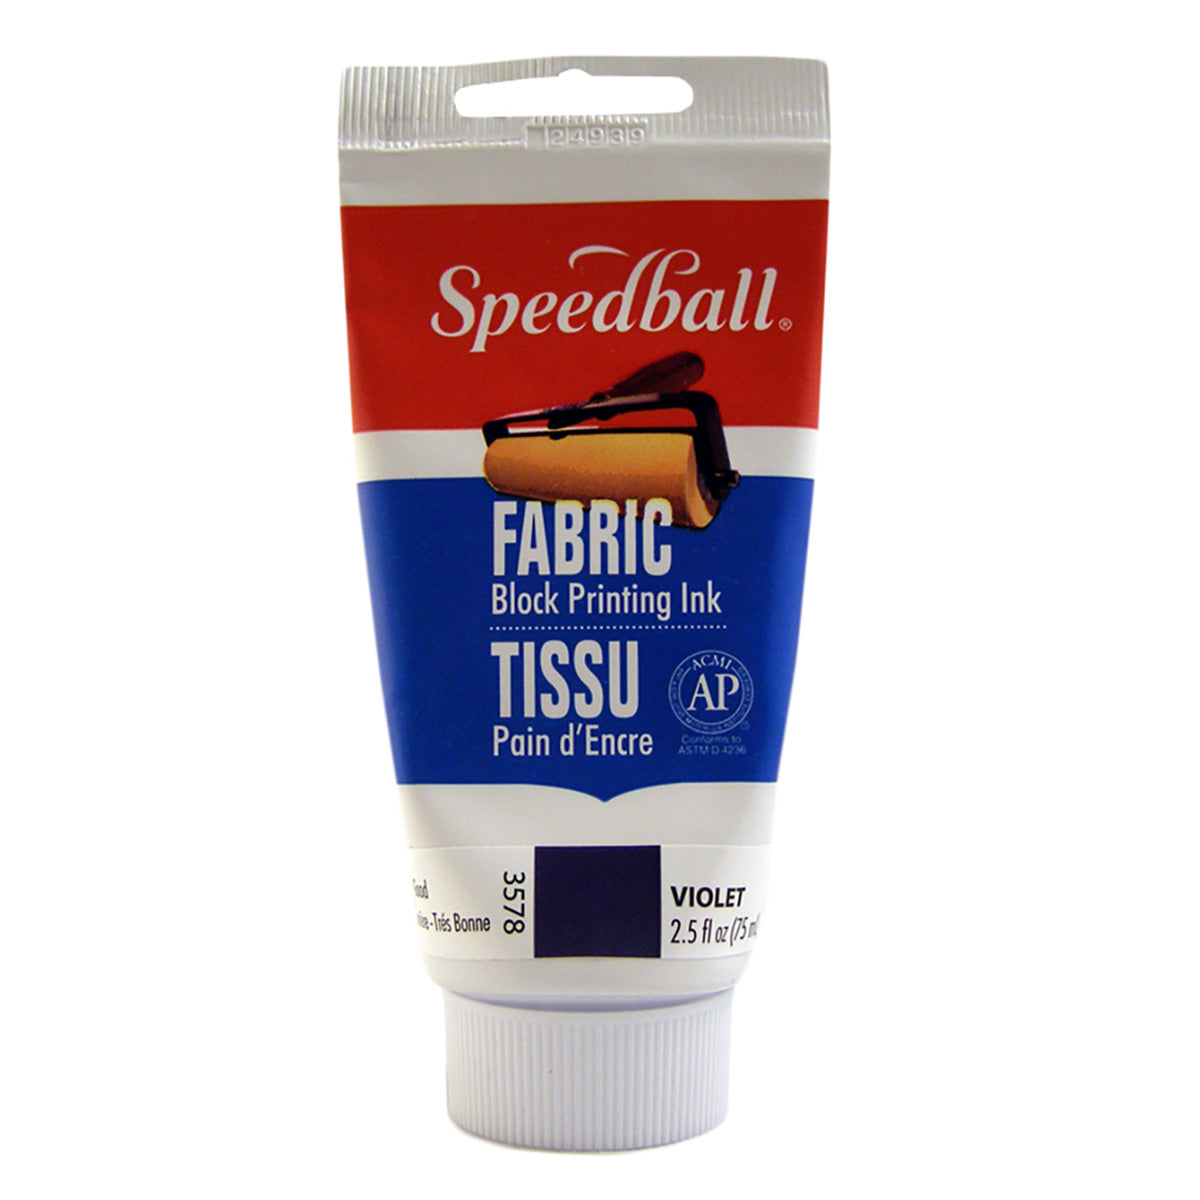 Speedball - Textilblockdruckfarbe 75ml (2.5oz) - Violett